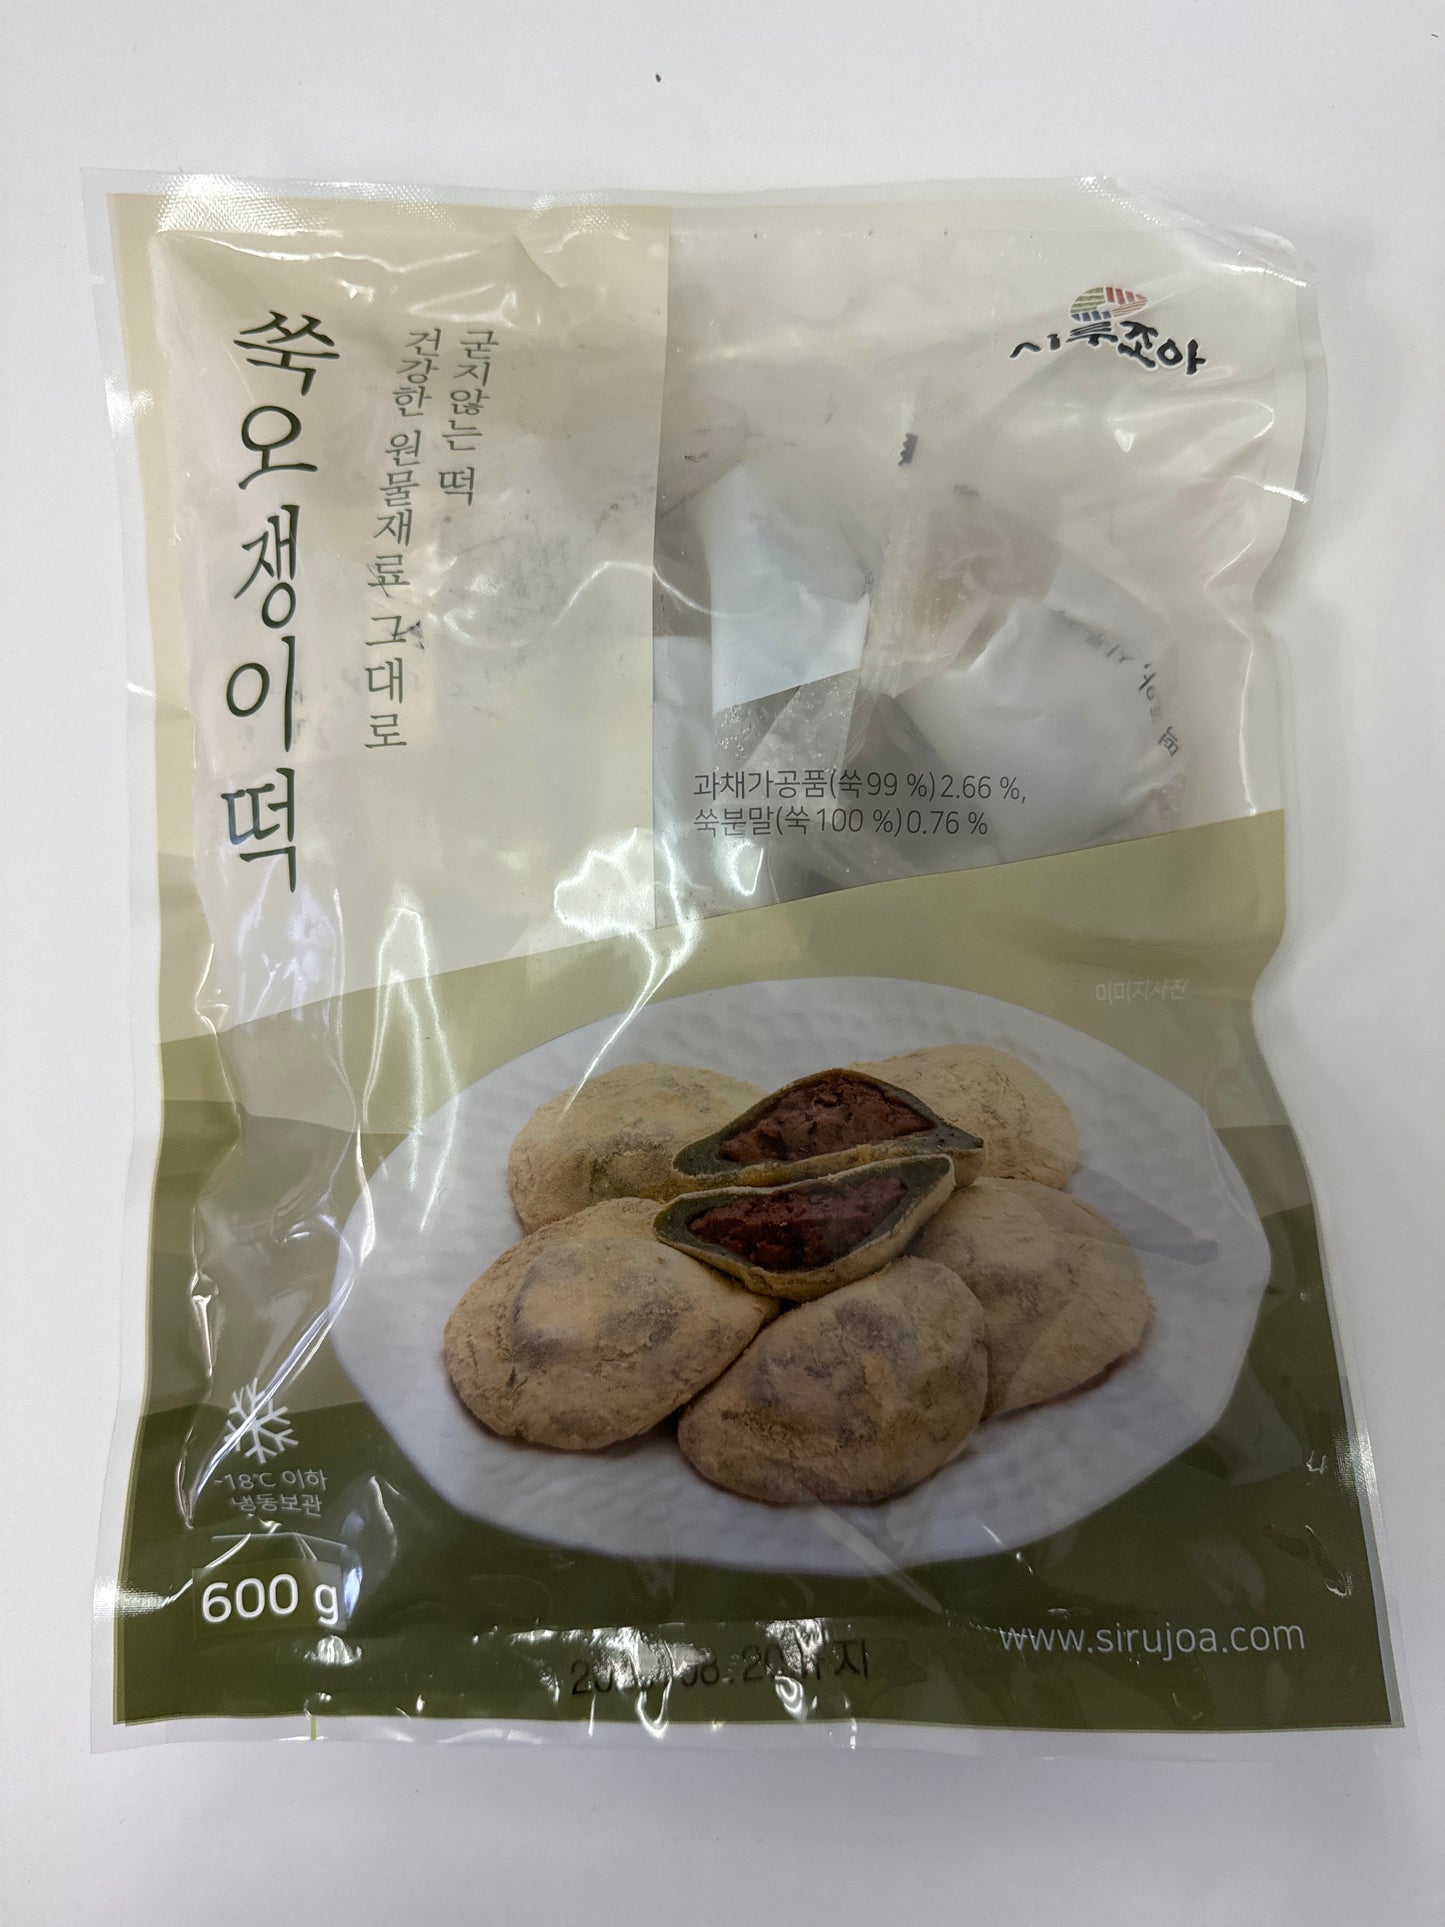 Sirujoa Unhardened Mugwort Cucumber Rice Cake 600g 10ea - 시루조아 굳지않는 쑥오쟁이떡 600g 10개입